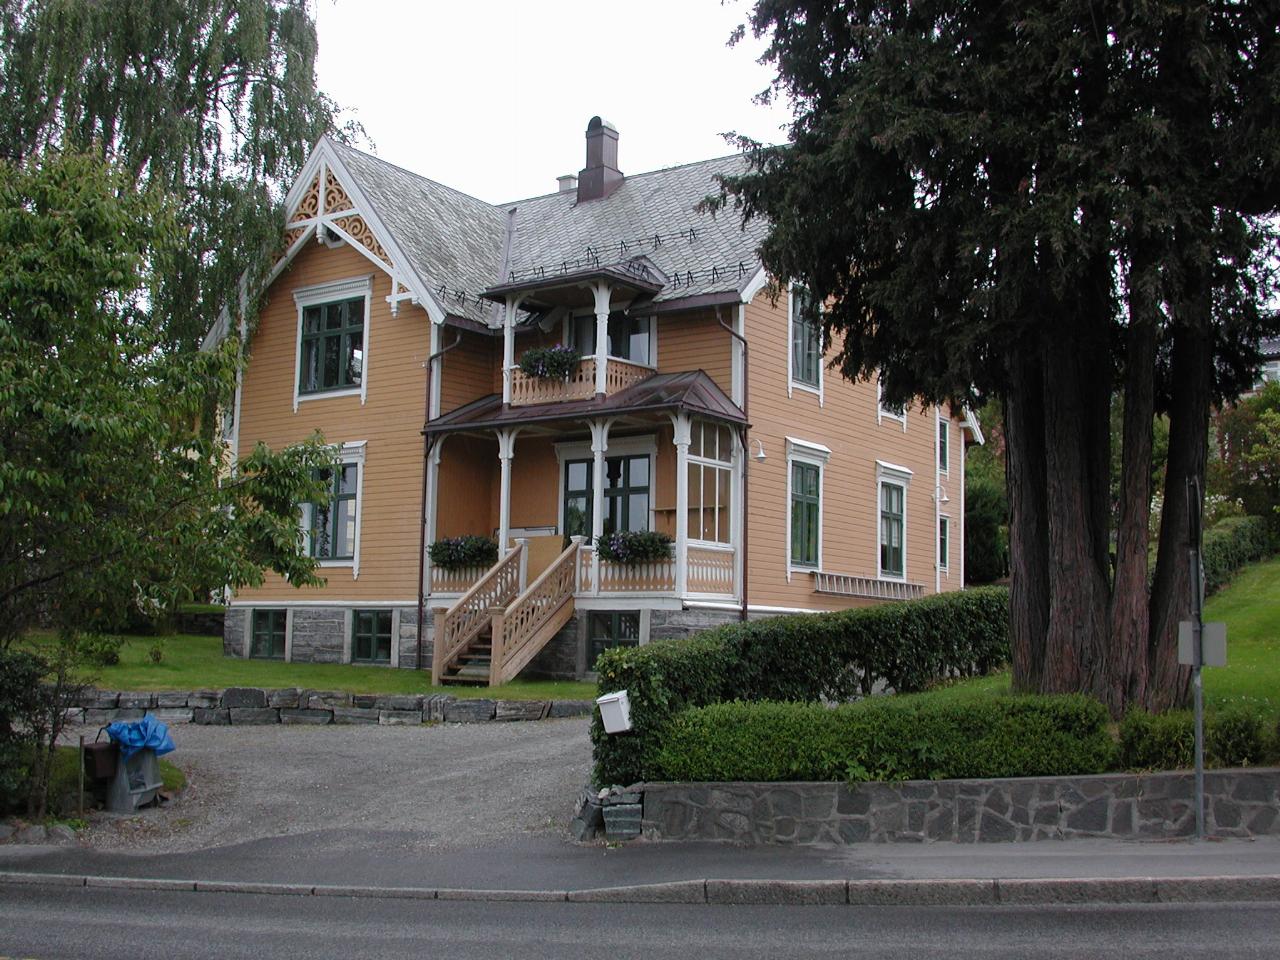 KPLU Viking Jazz: Just a random house in Molde